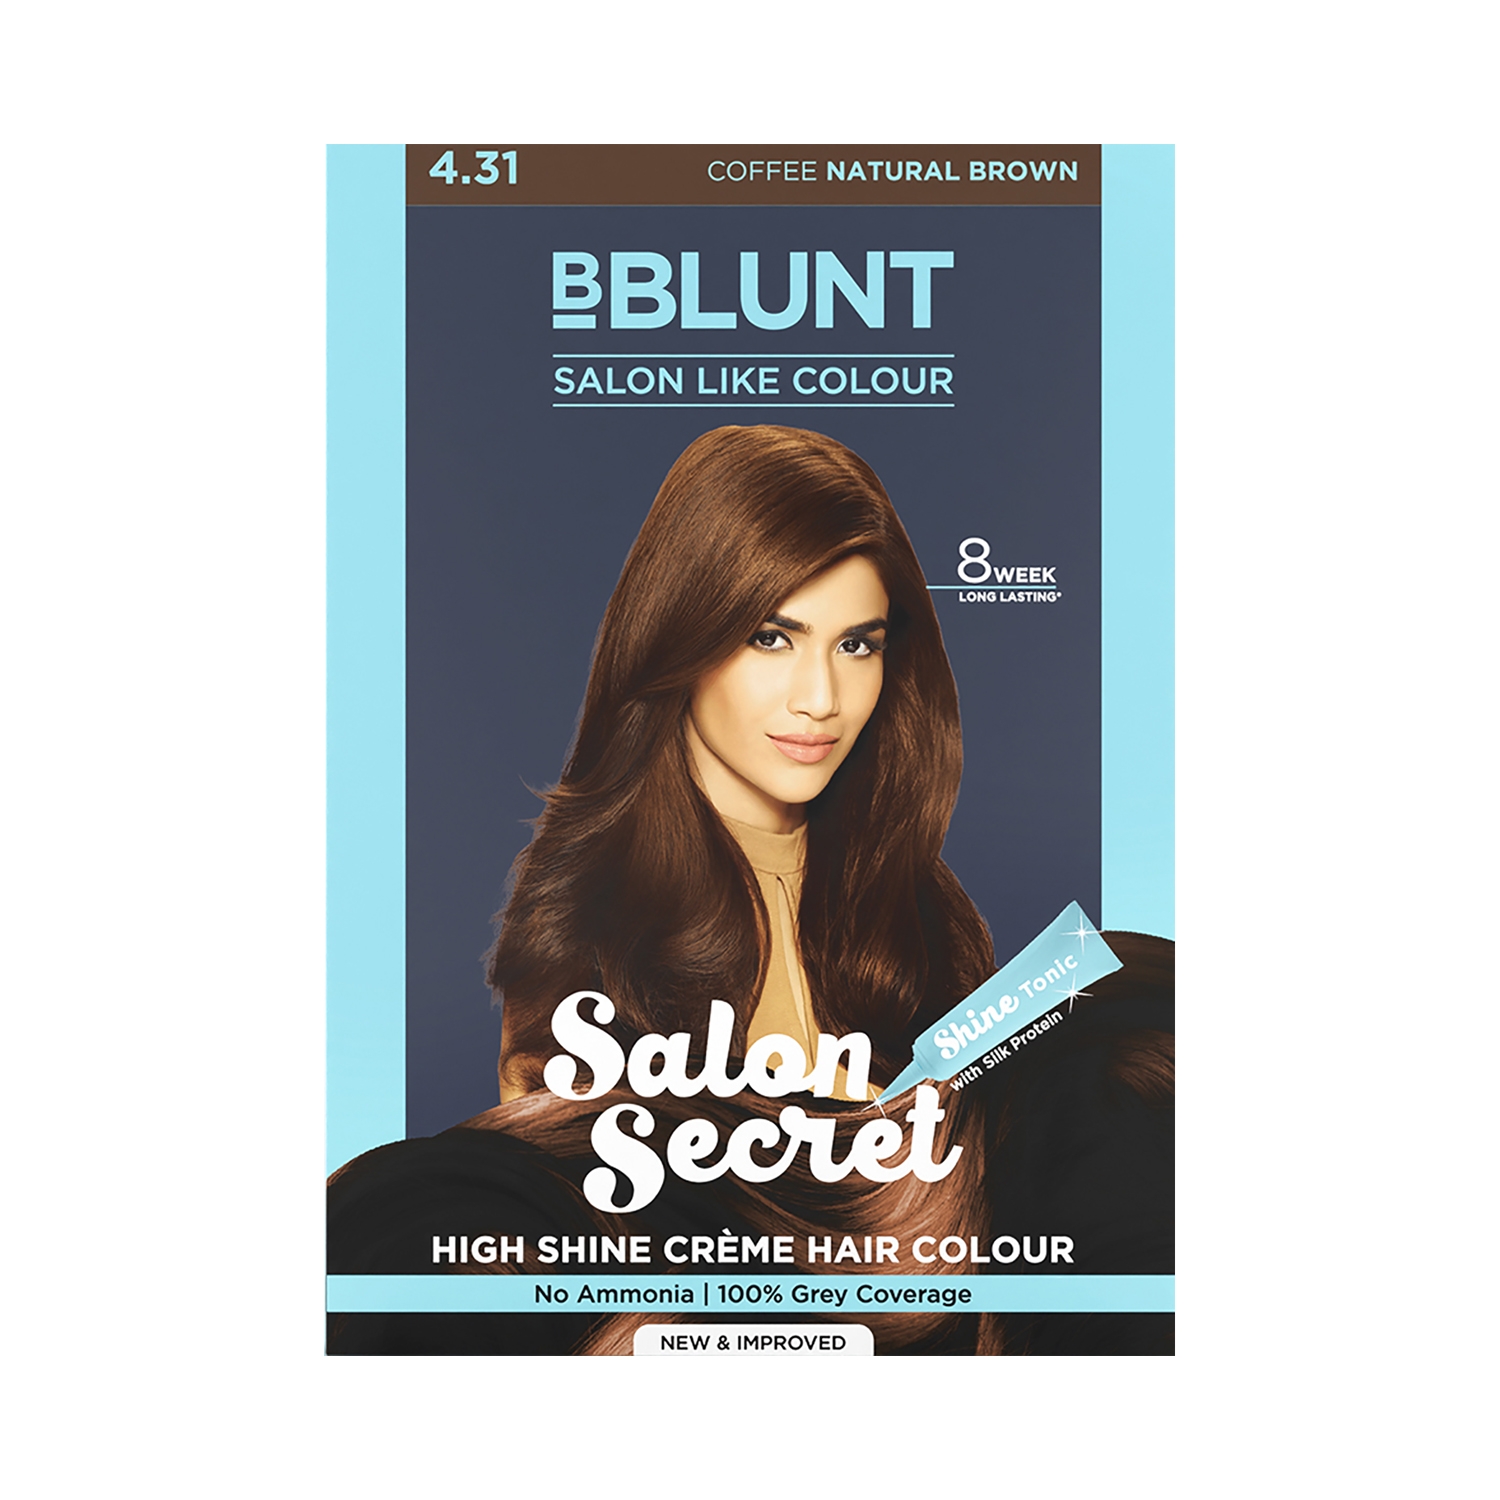 BBLUNT Salon Secret Hair Colour Review- Natural Black - Trends and Health